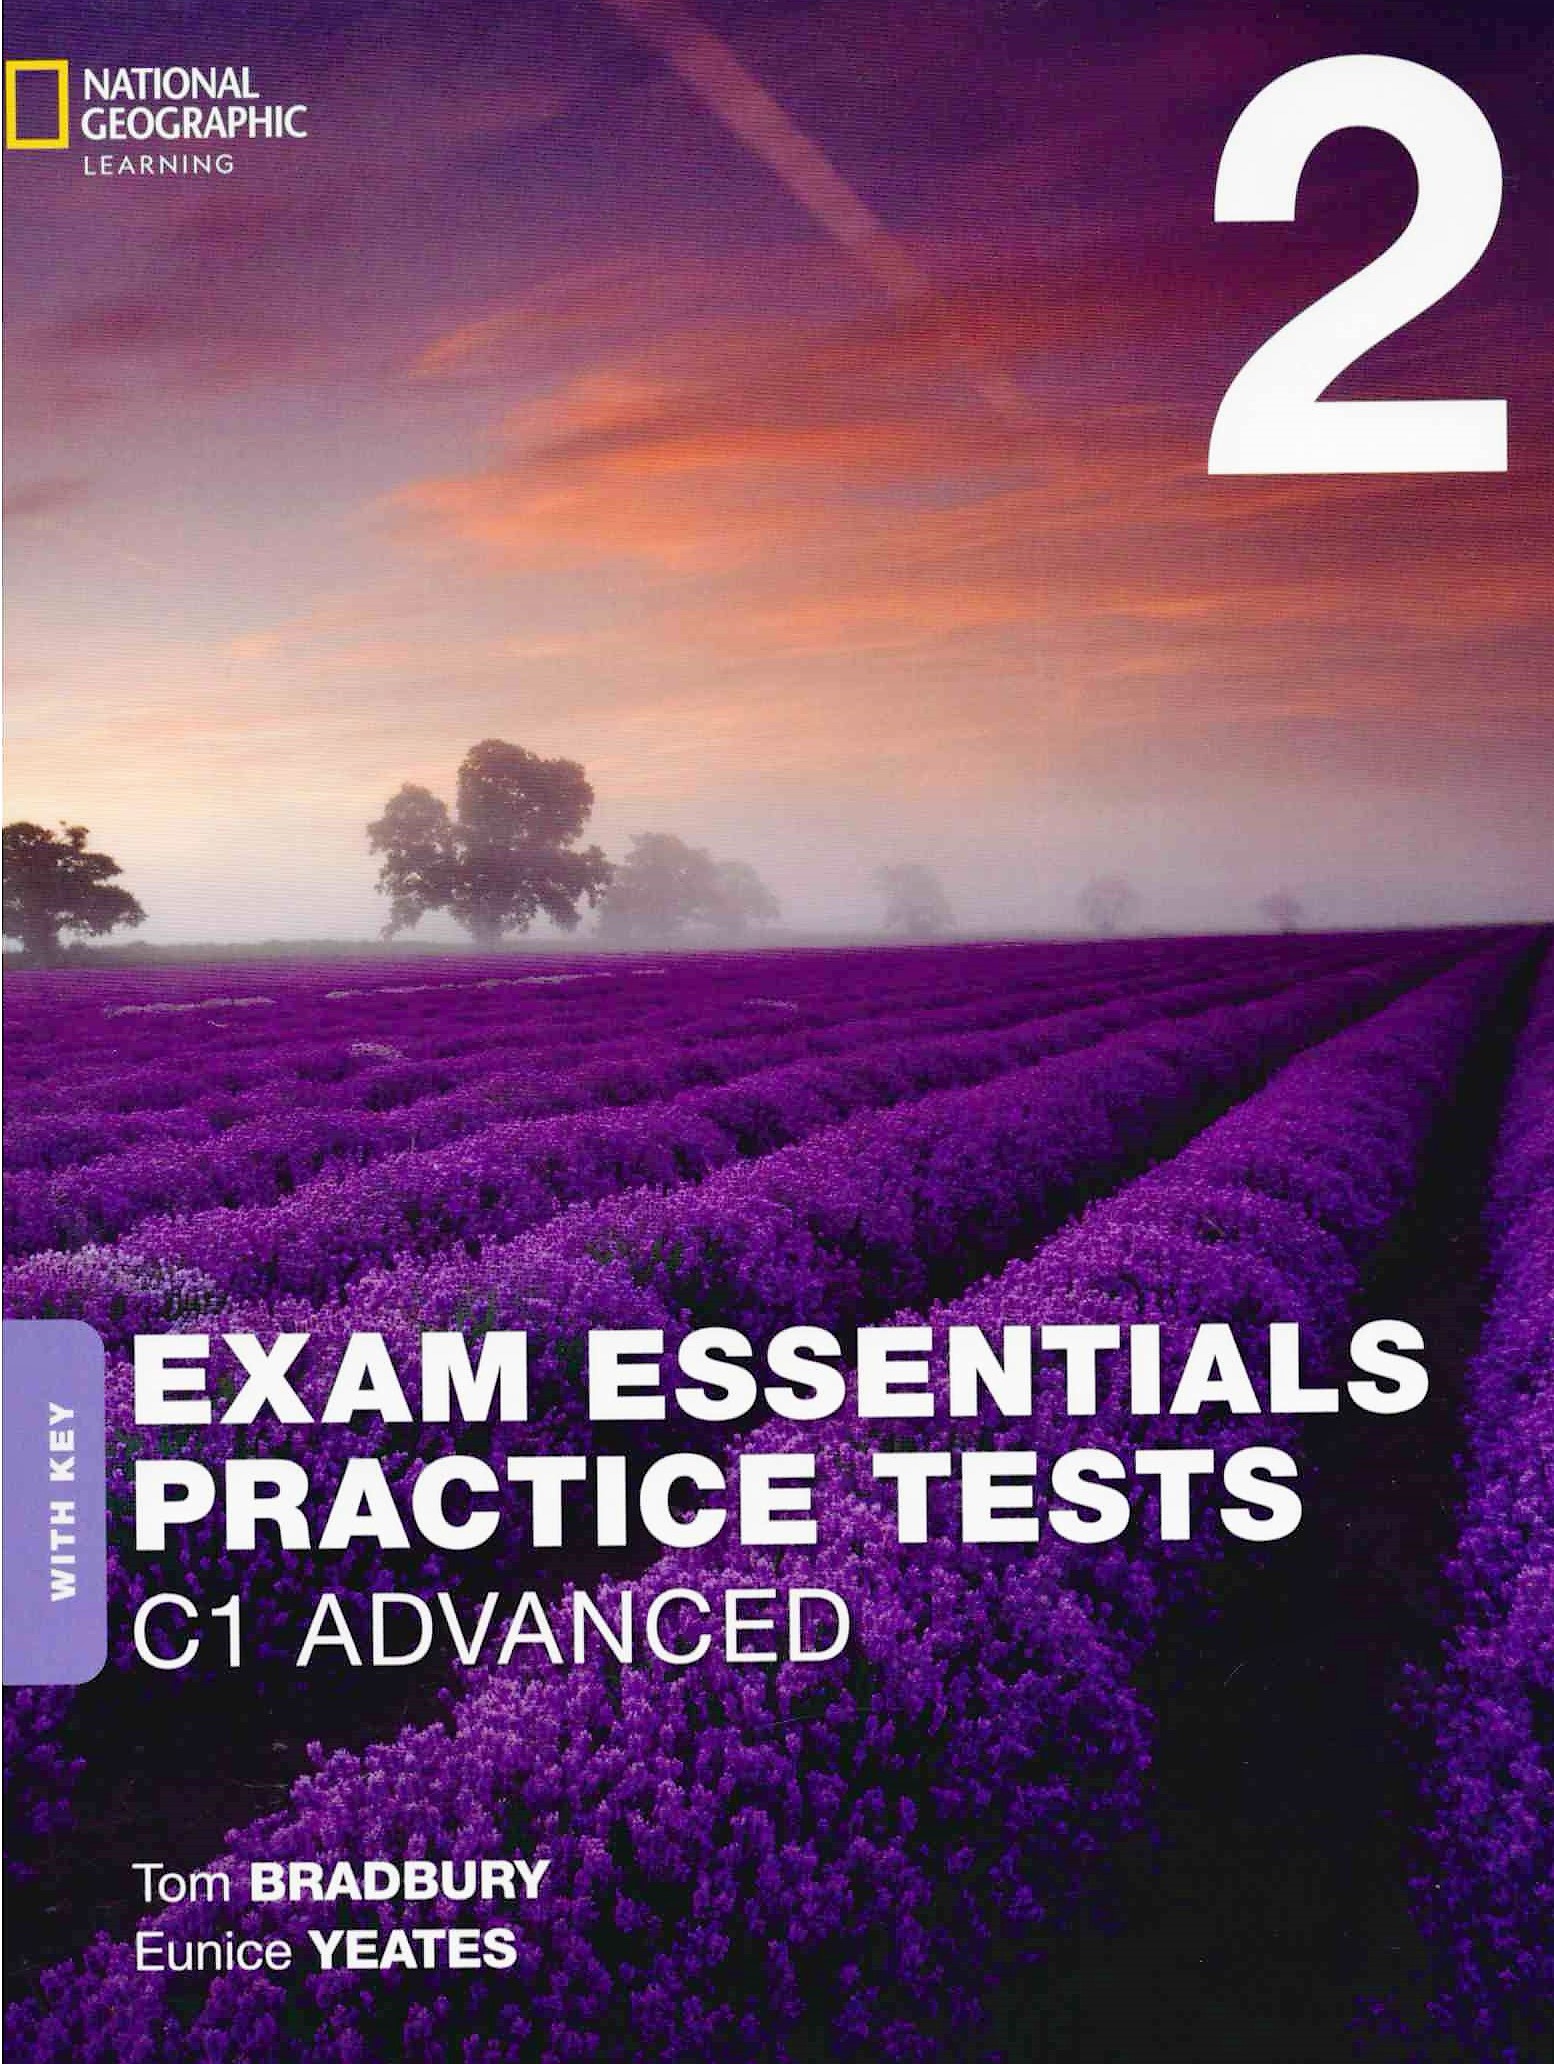 Exam Essentials Practice Tests Cambridge English (Updated edition) C1 Advanced 2 + Key / Тесты + ответы